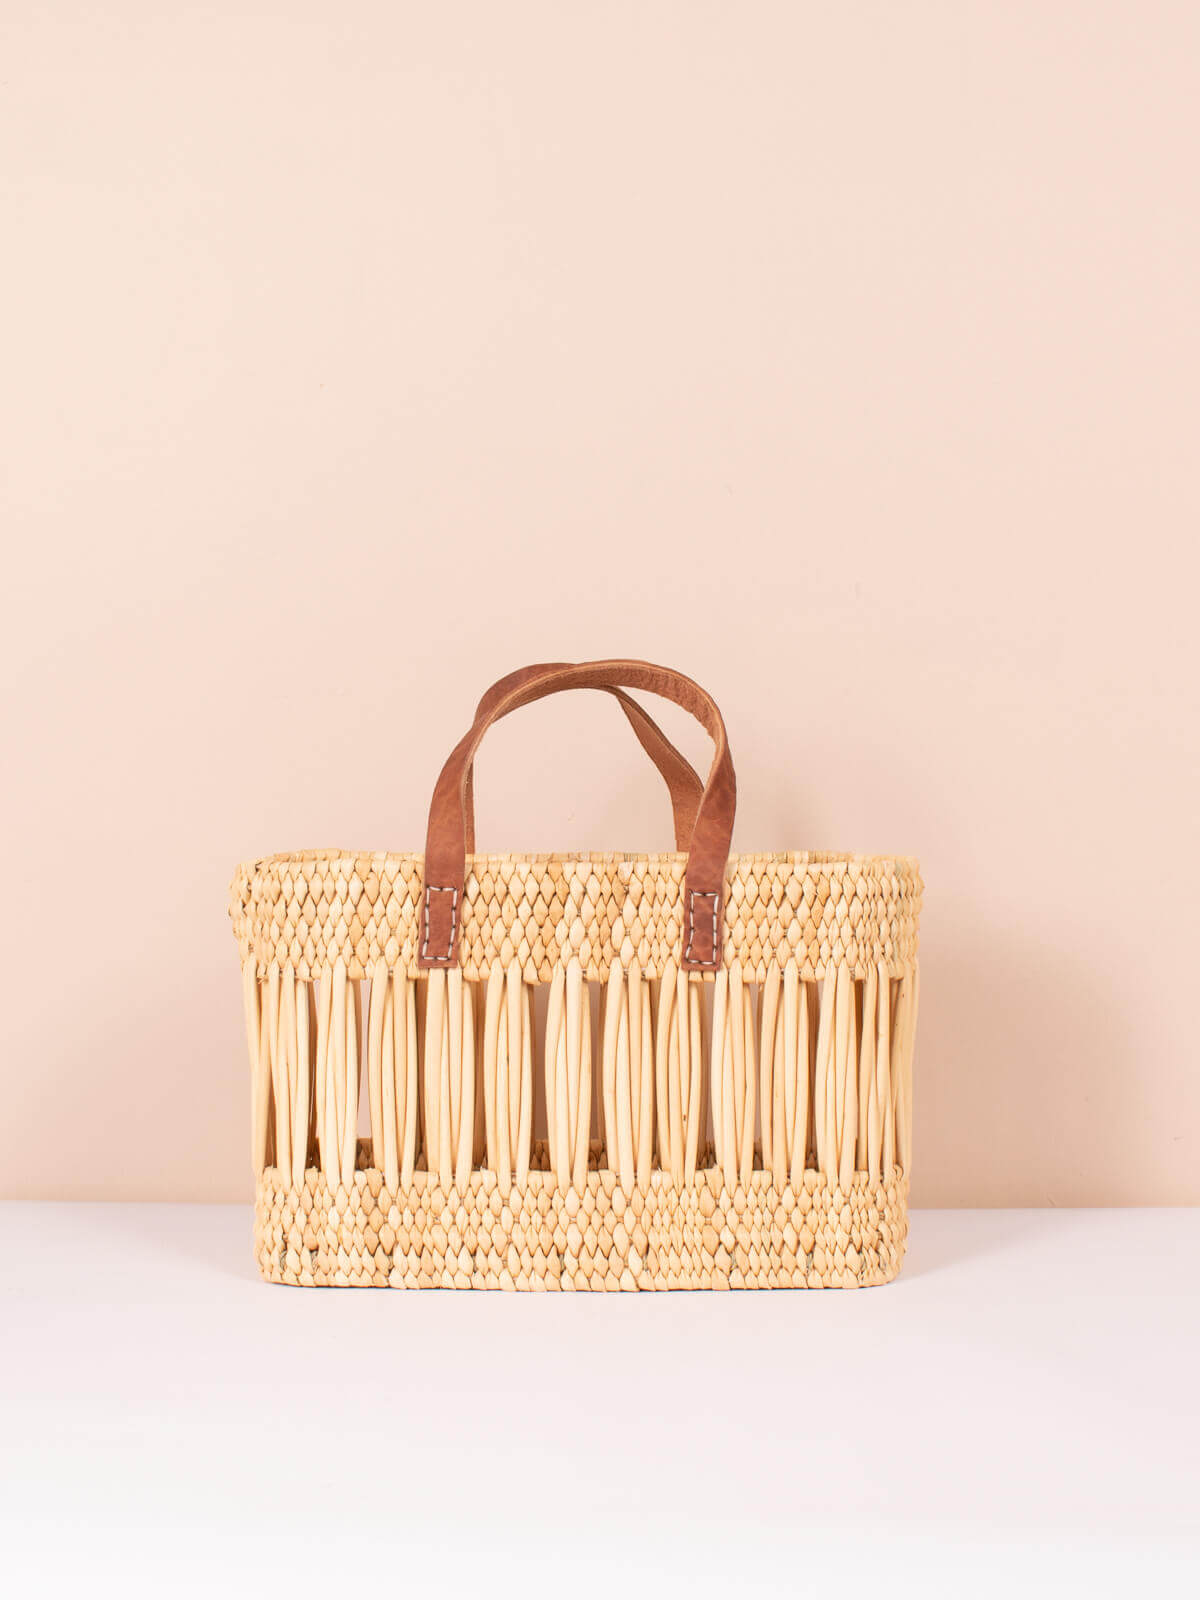 Decorative Reed Basket - Set of 2